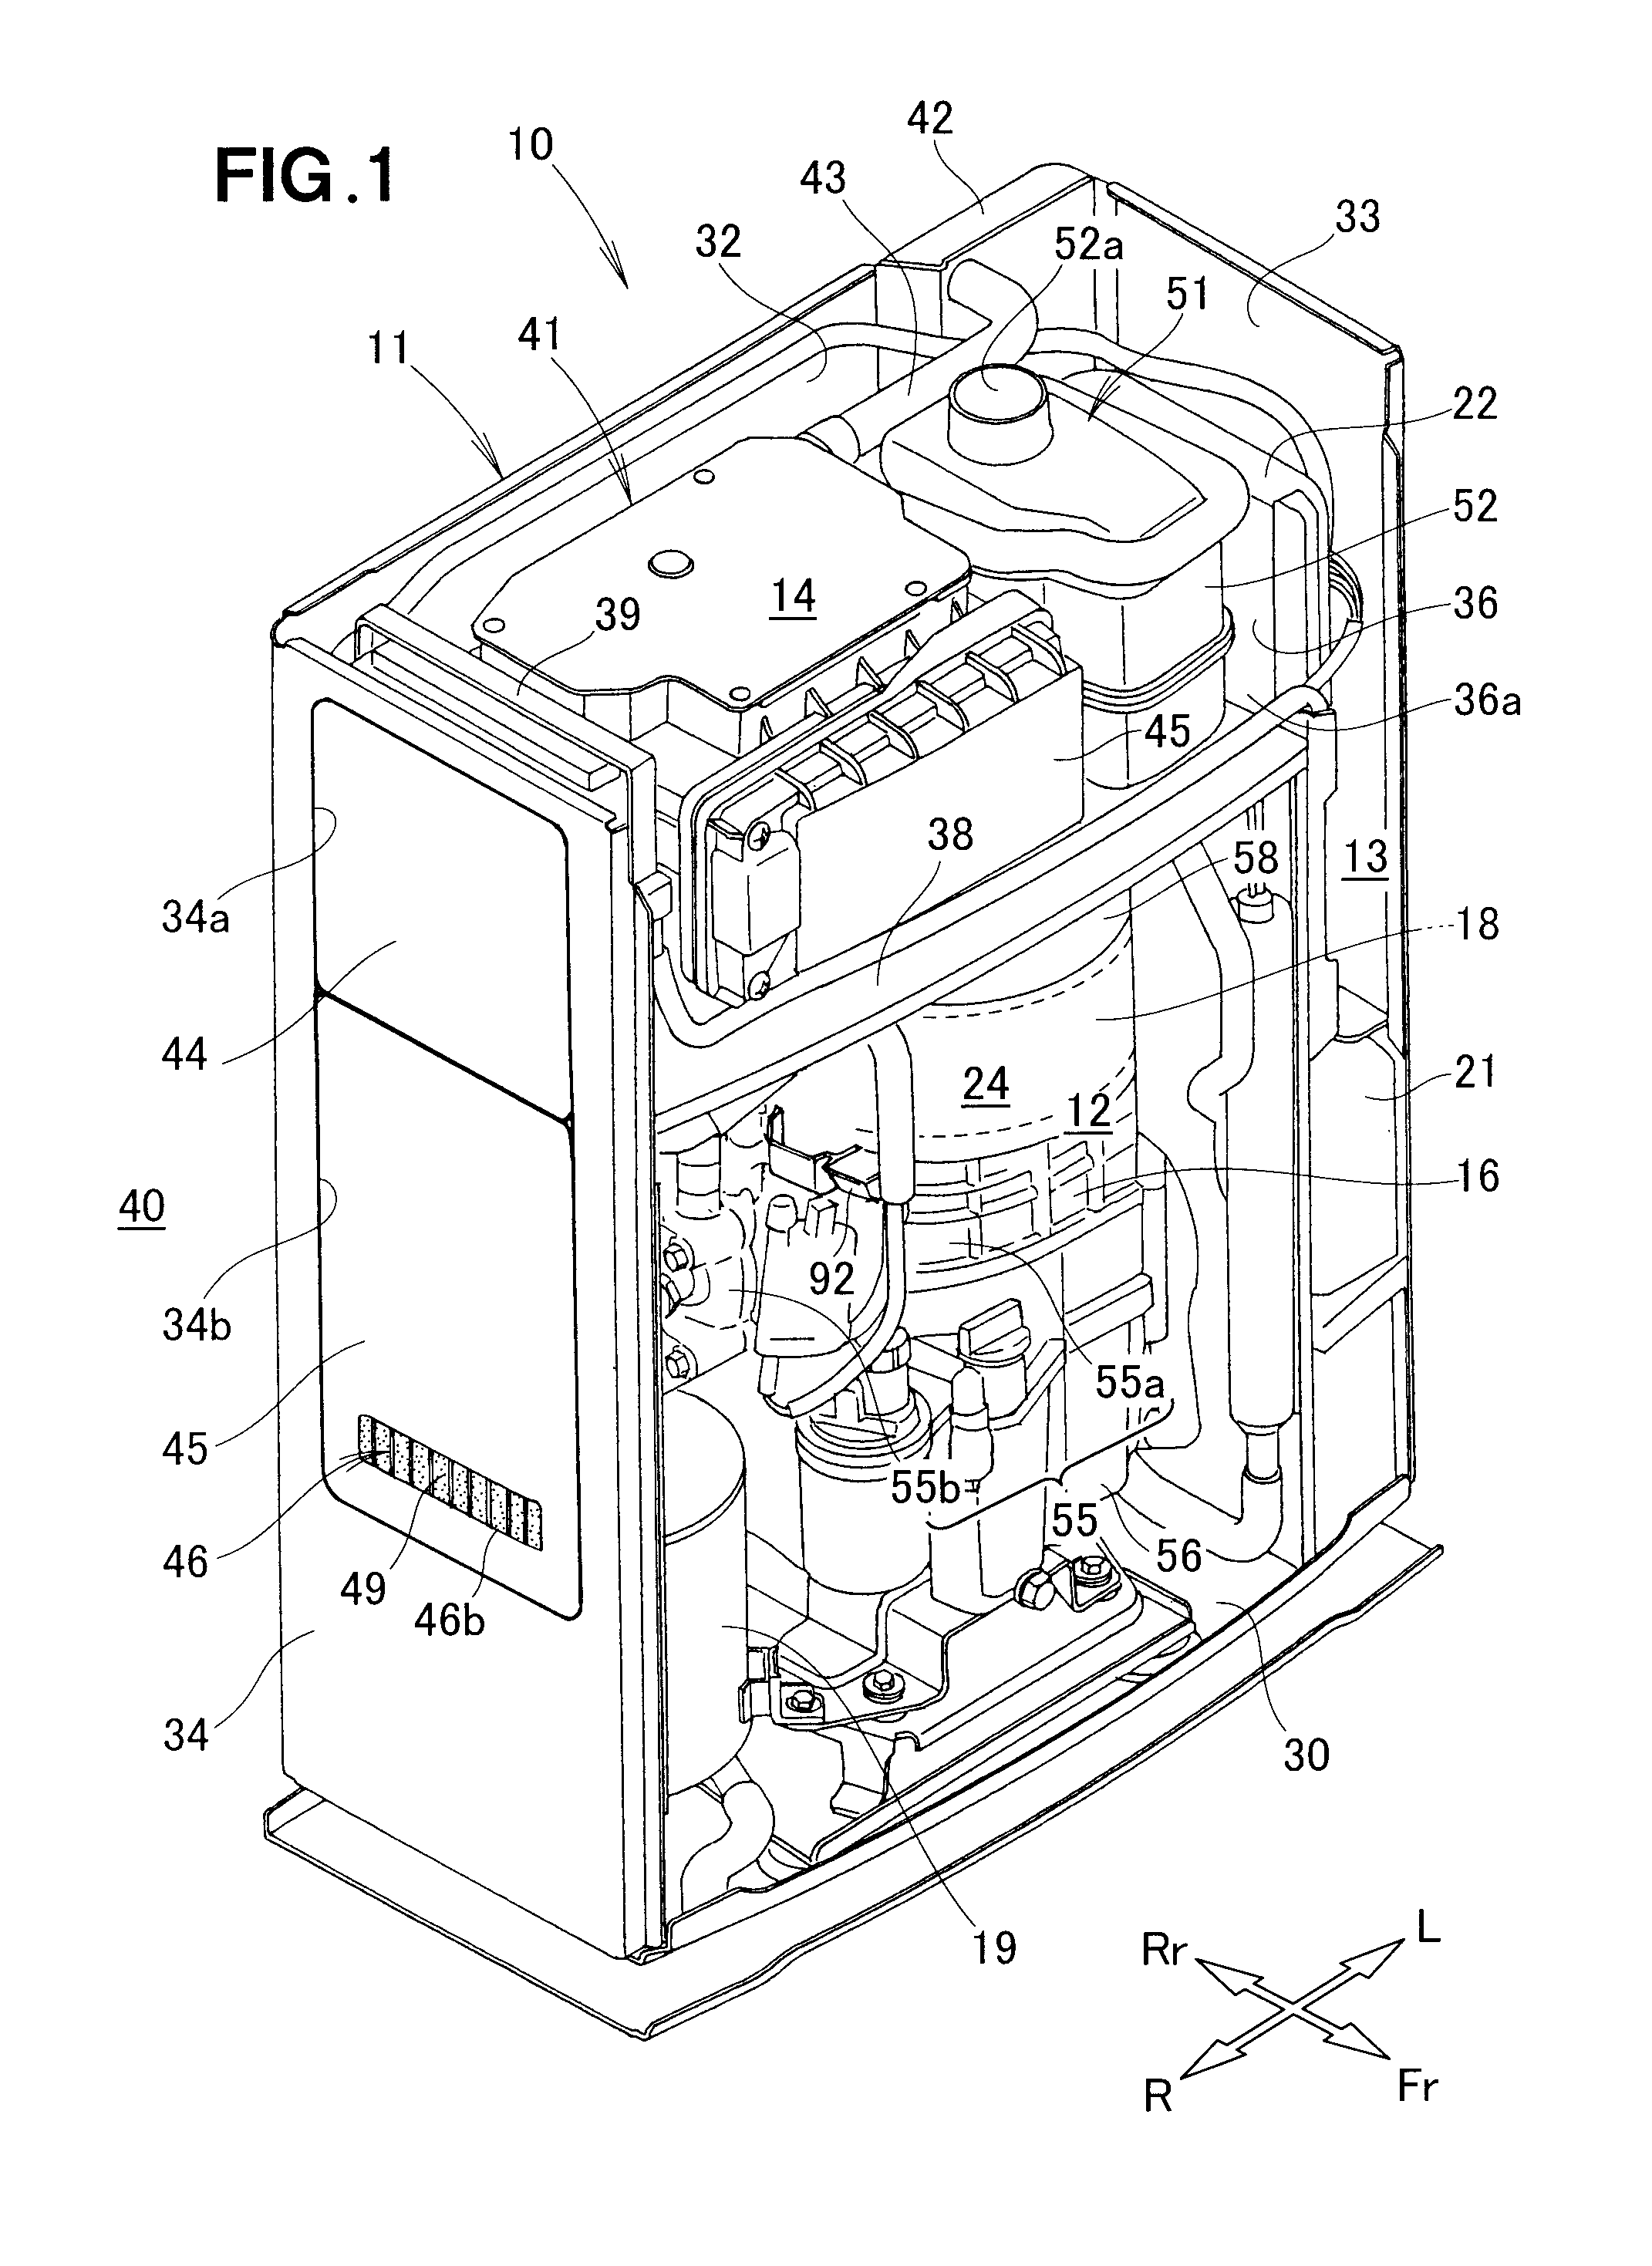 Cogeneration apparatus case venting system